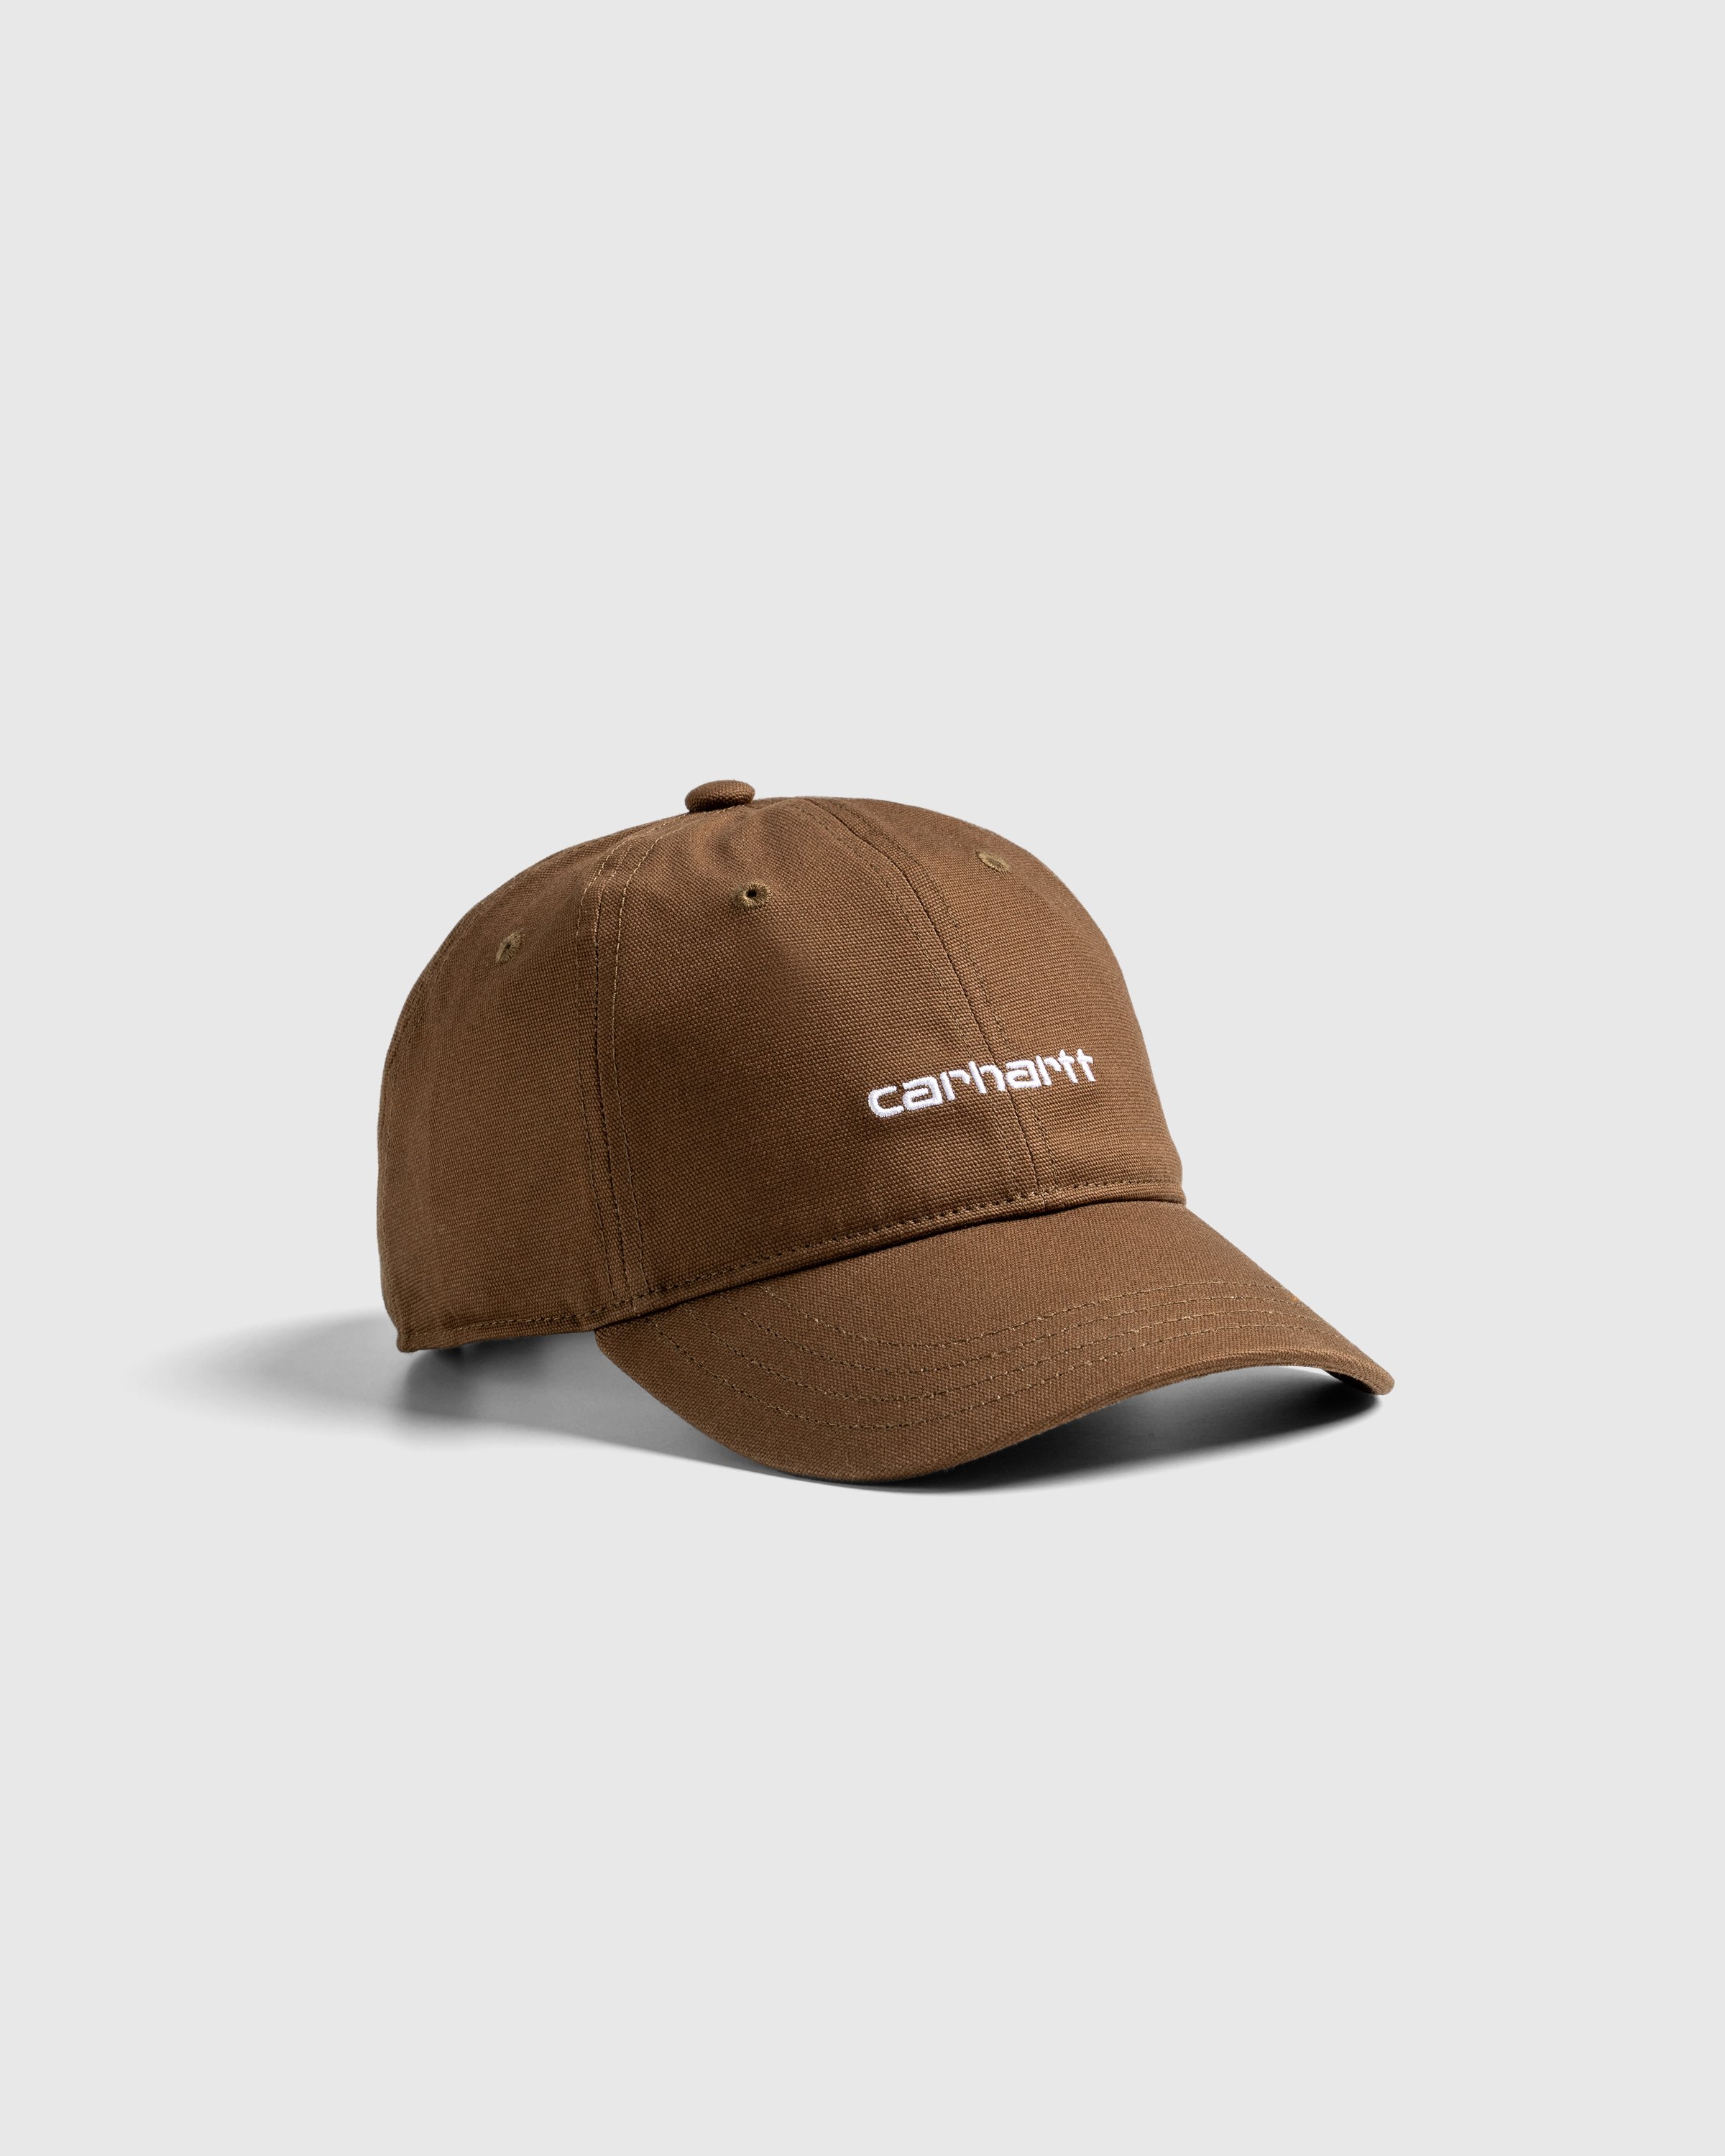 Carhartt WIP - Canvas Script Cap Lumber / White - Accessories - Brown - Image 1